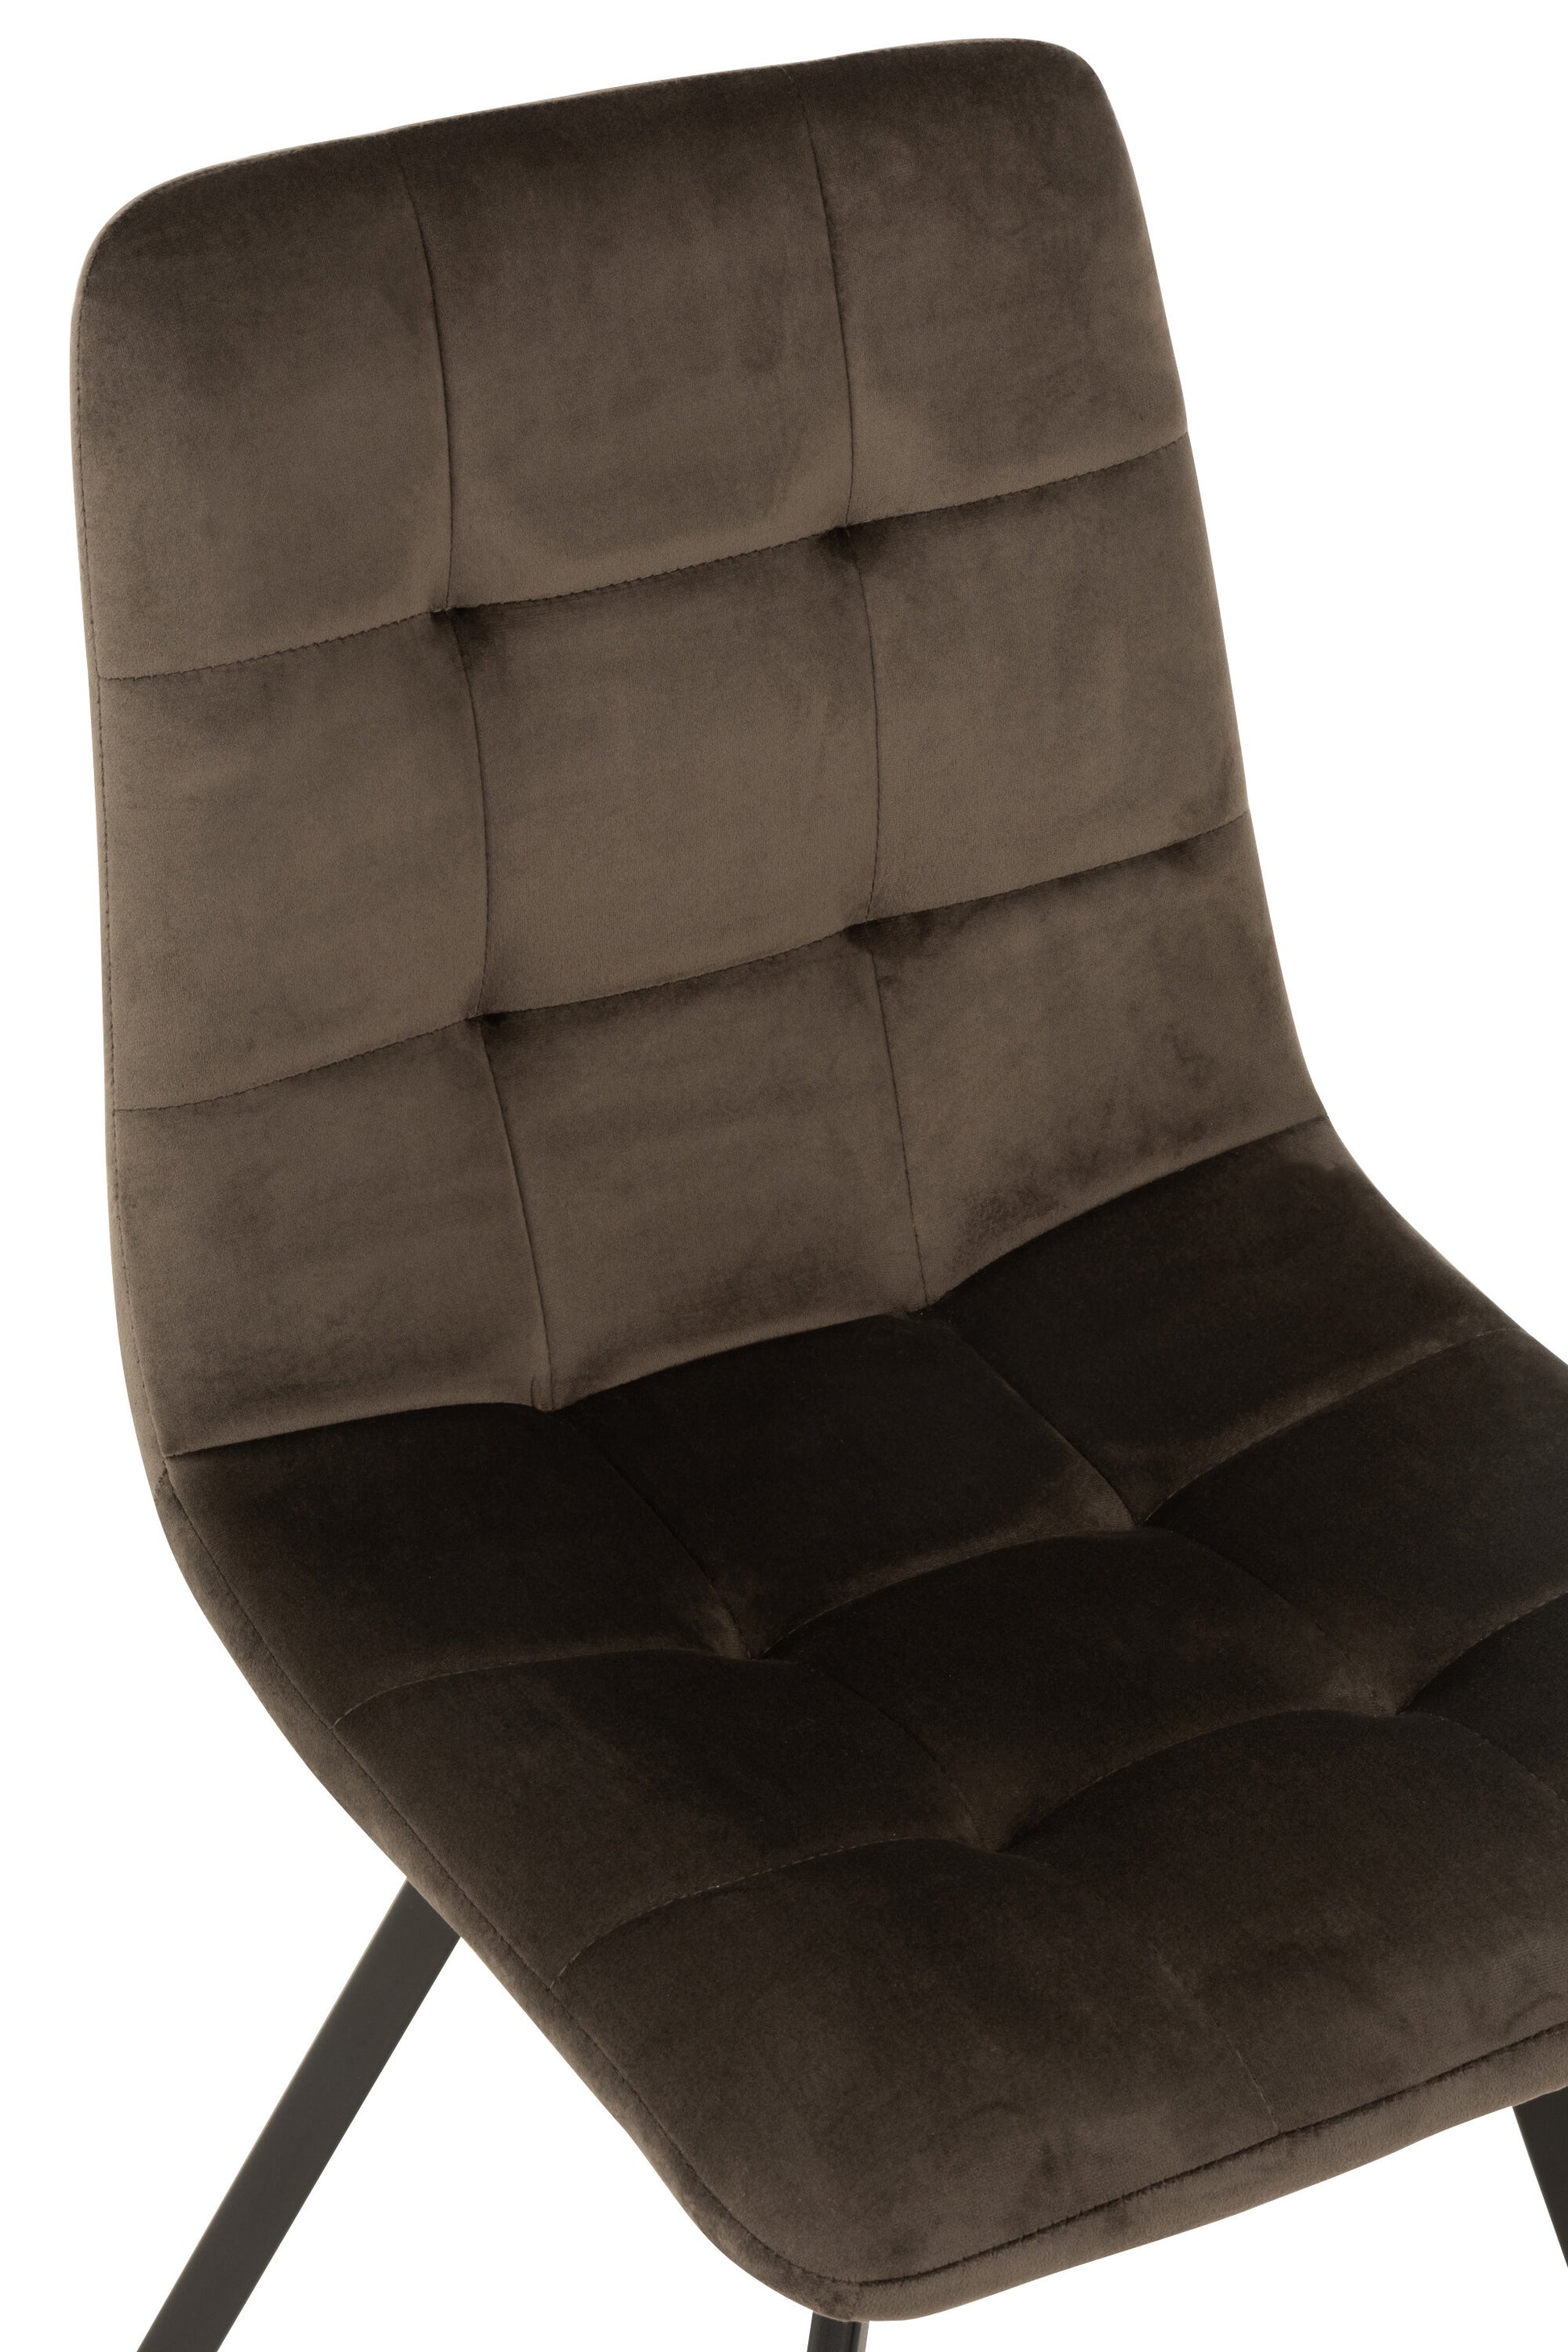 Morgan Stoel Textiel Bruin-Stoel-J-Line-chair-morgan-textile-met-brn-6-eetkamerstoel, stoel-Breedte 47 Hoogte 82 Lengte 55 Gewicht 4,21 kg Verzameling WINTER 2021 Kleur 1 GRIJS/GREIGE Materiaal samenstelling POLYESTER(30%),METAAL(20%),TRIPLEX(20%),SPONS(30%) Intrastat-code 94017100 Maximaal zitgewicht 120 Stoelhoogte 48 Montage vereist ja-5400924154875-15487-Cerasus Homestyle